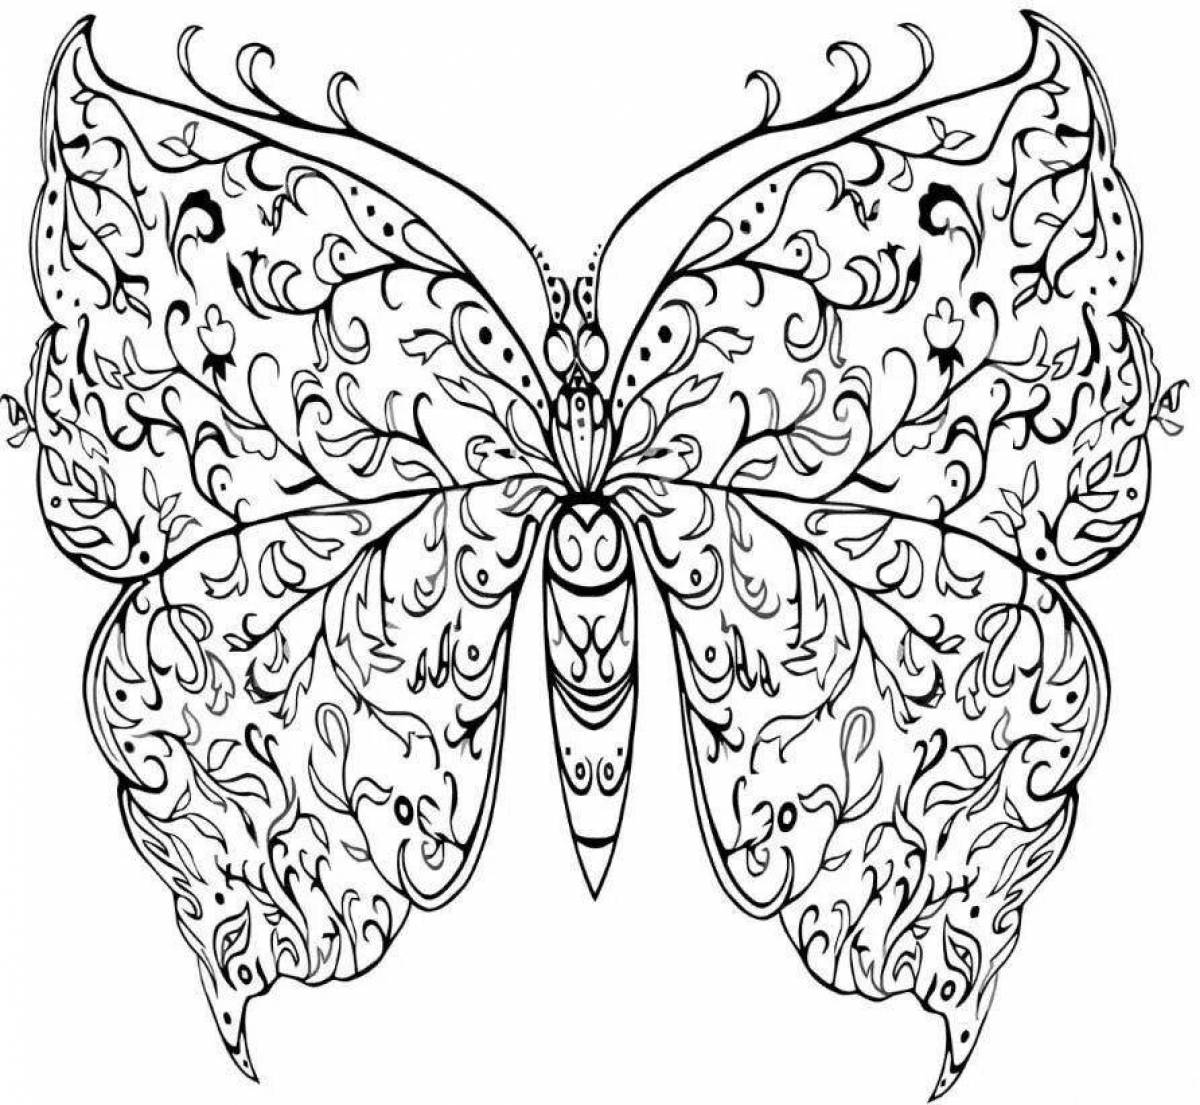 Joyful anti-stress butterfly coloring book